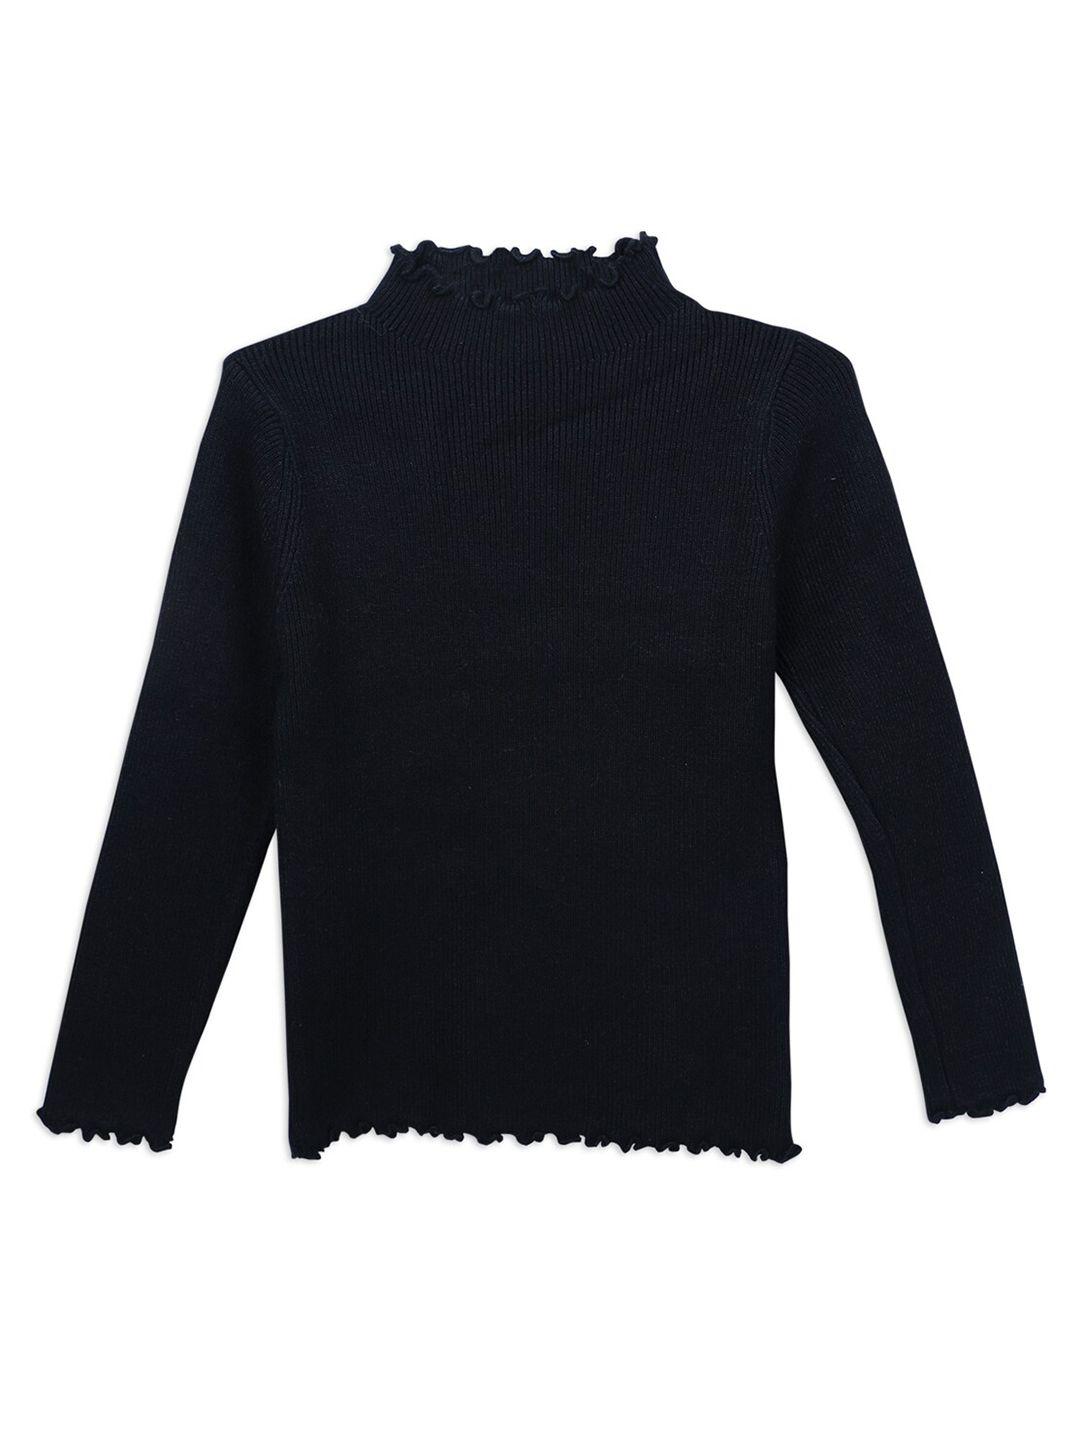 baby-moo-unisex-kids-black-basic-ribbed-full-sleeves-knitted-kids-sweater